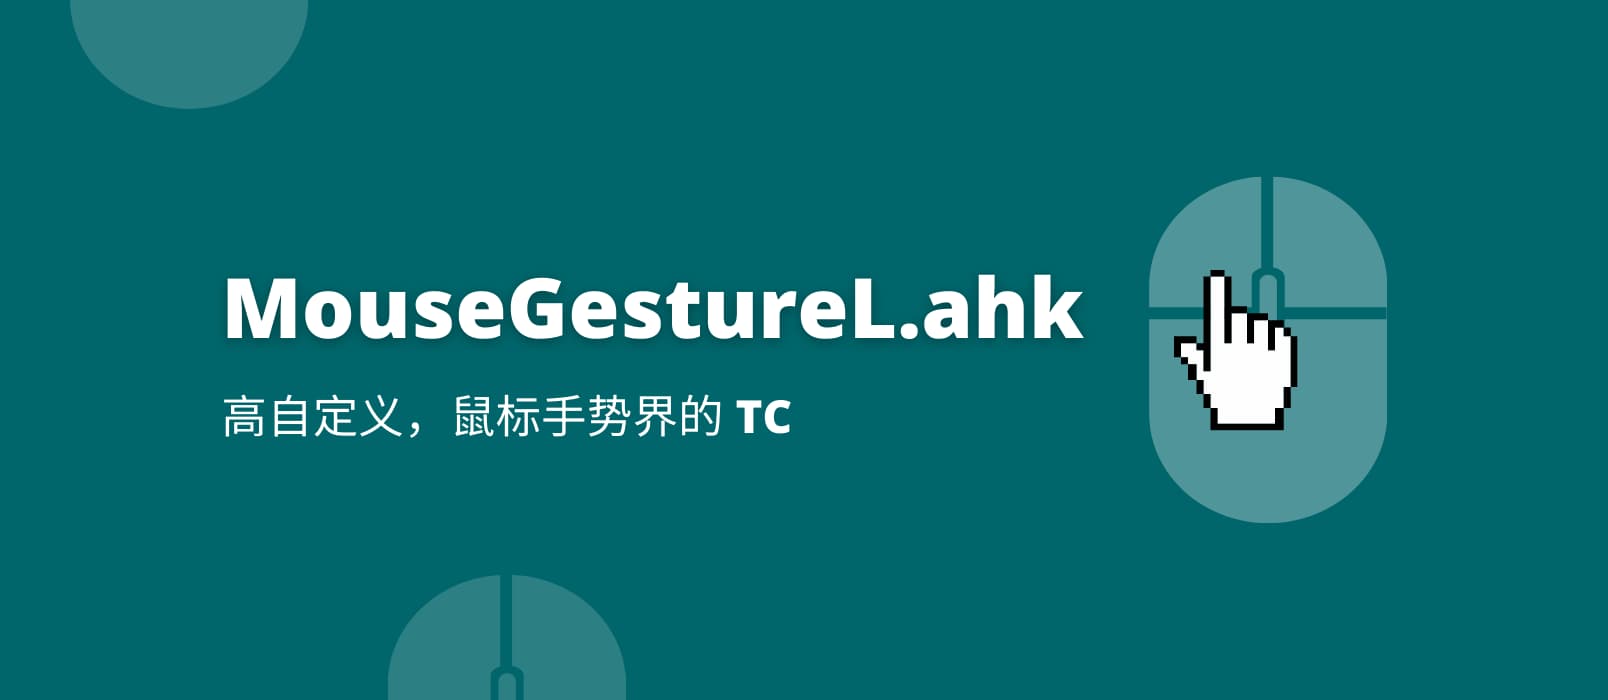 MouseGestureL.ahk - 高自定义，堪称鼠标手势界的 TC[Windows]